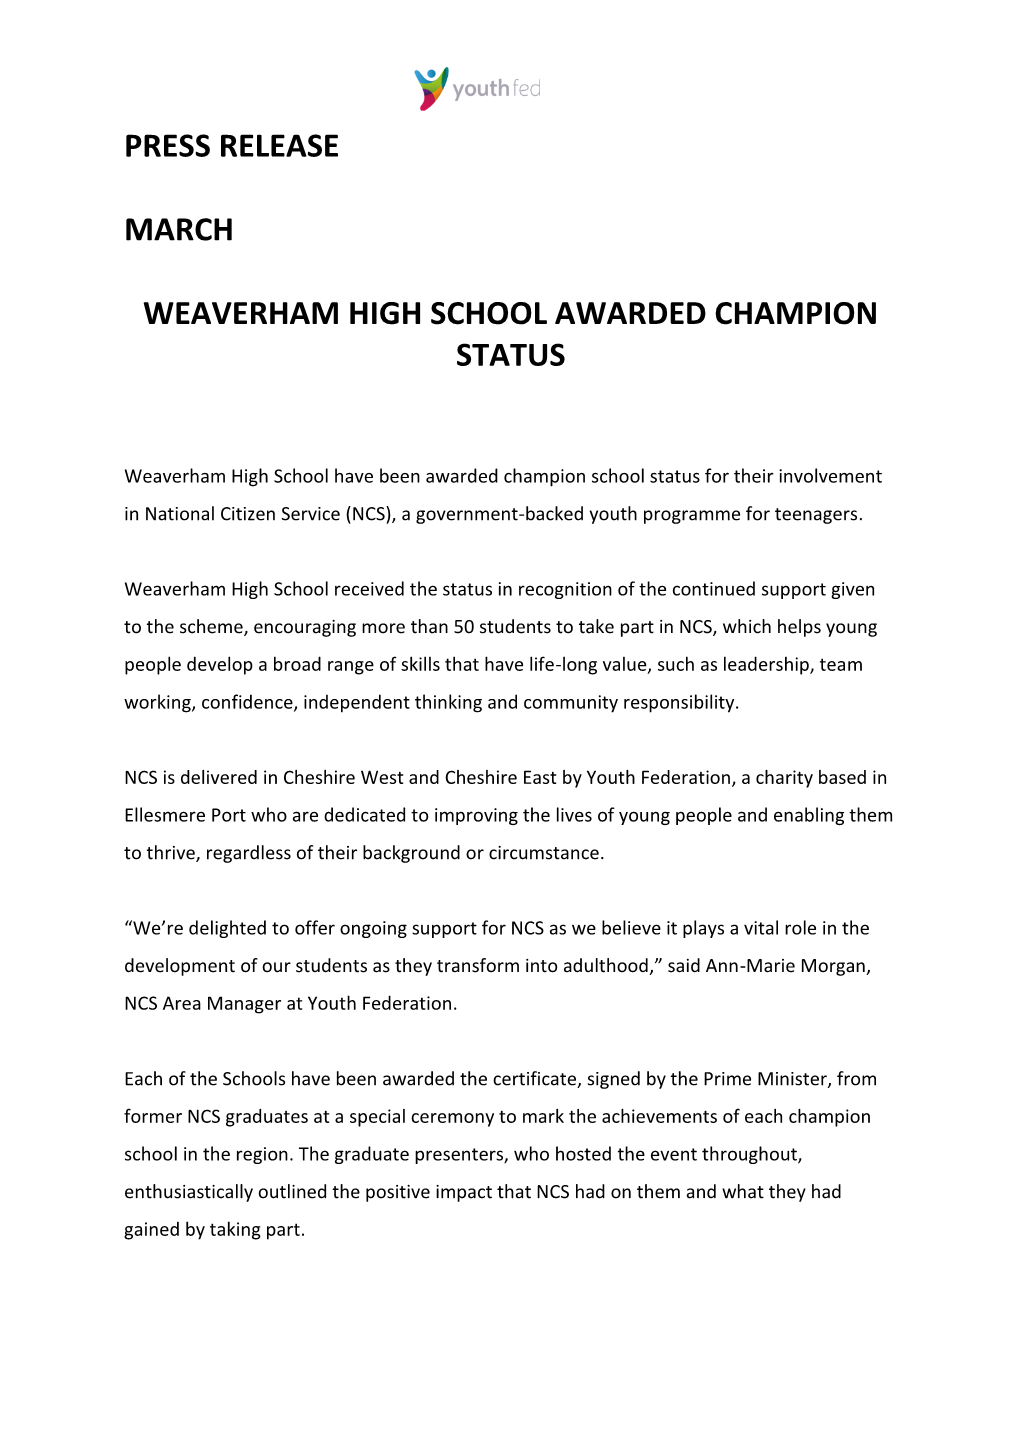 Press Release March Weaverham High School